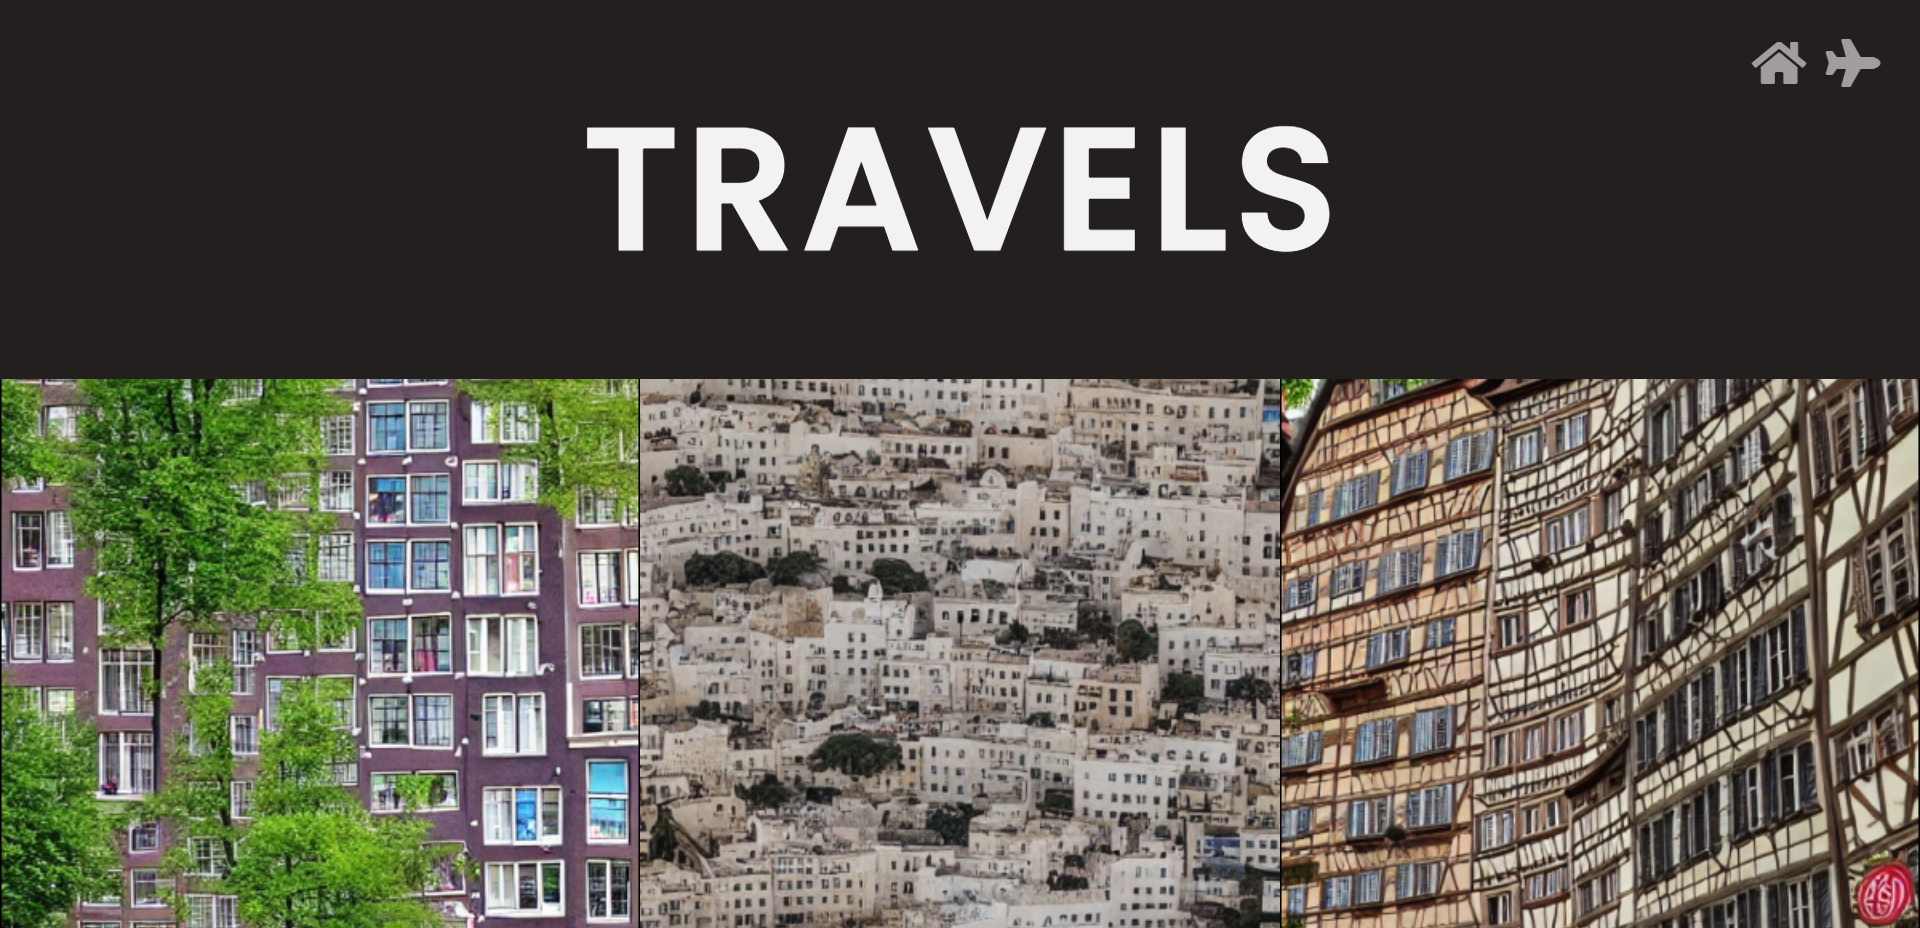 Travels Homepage